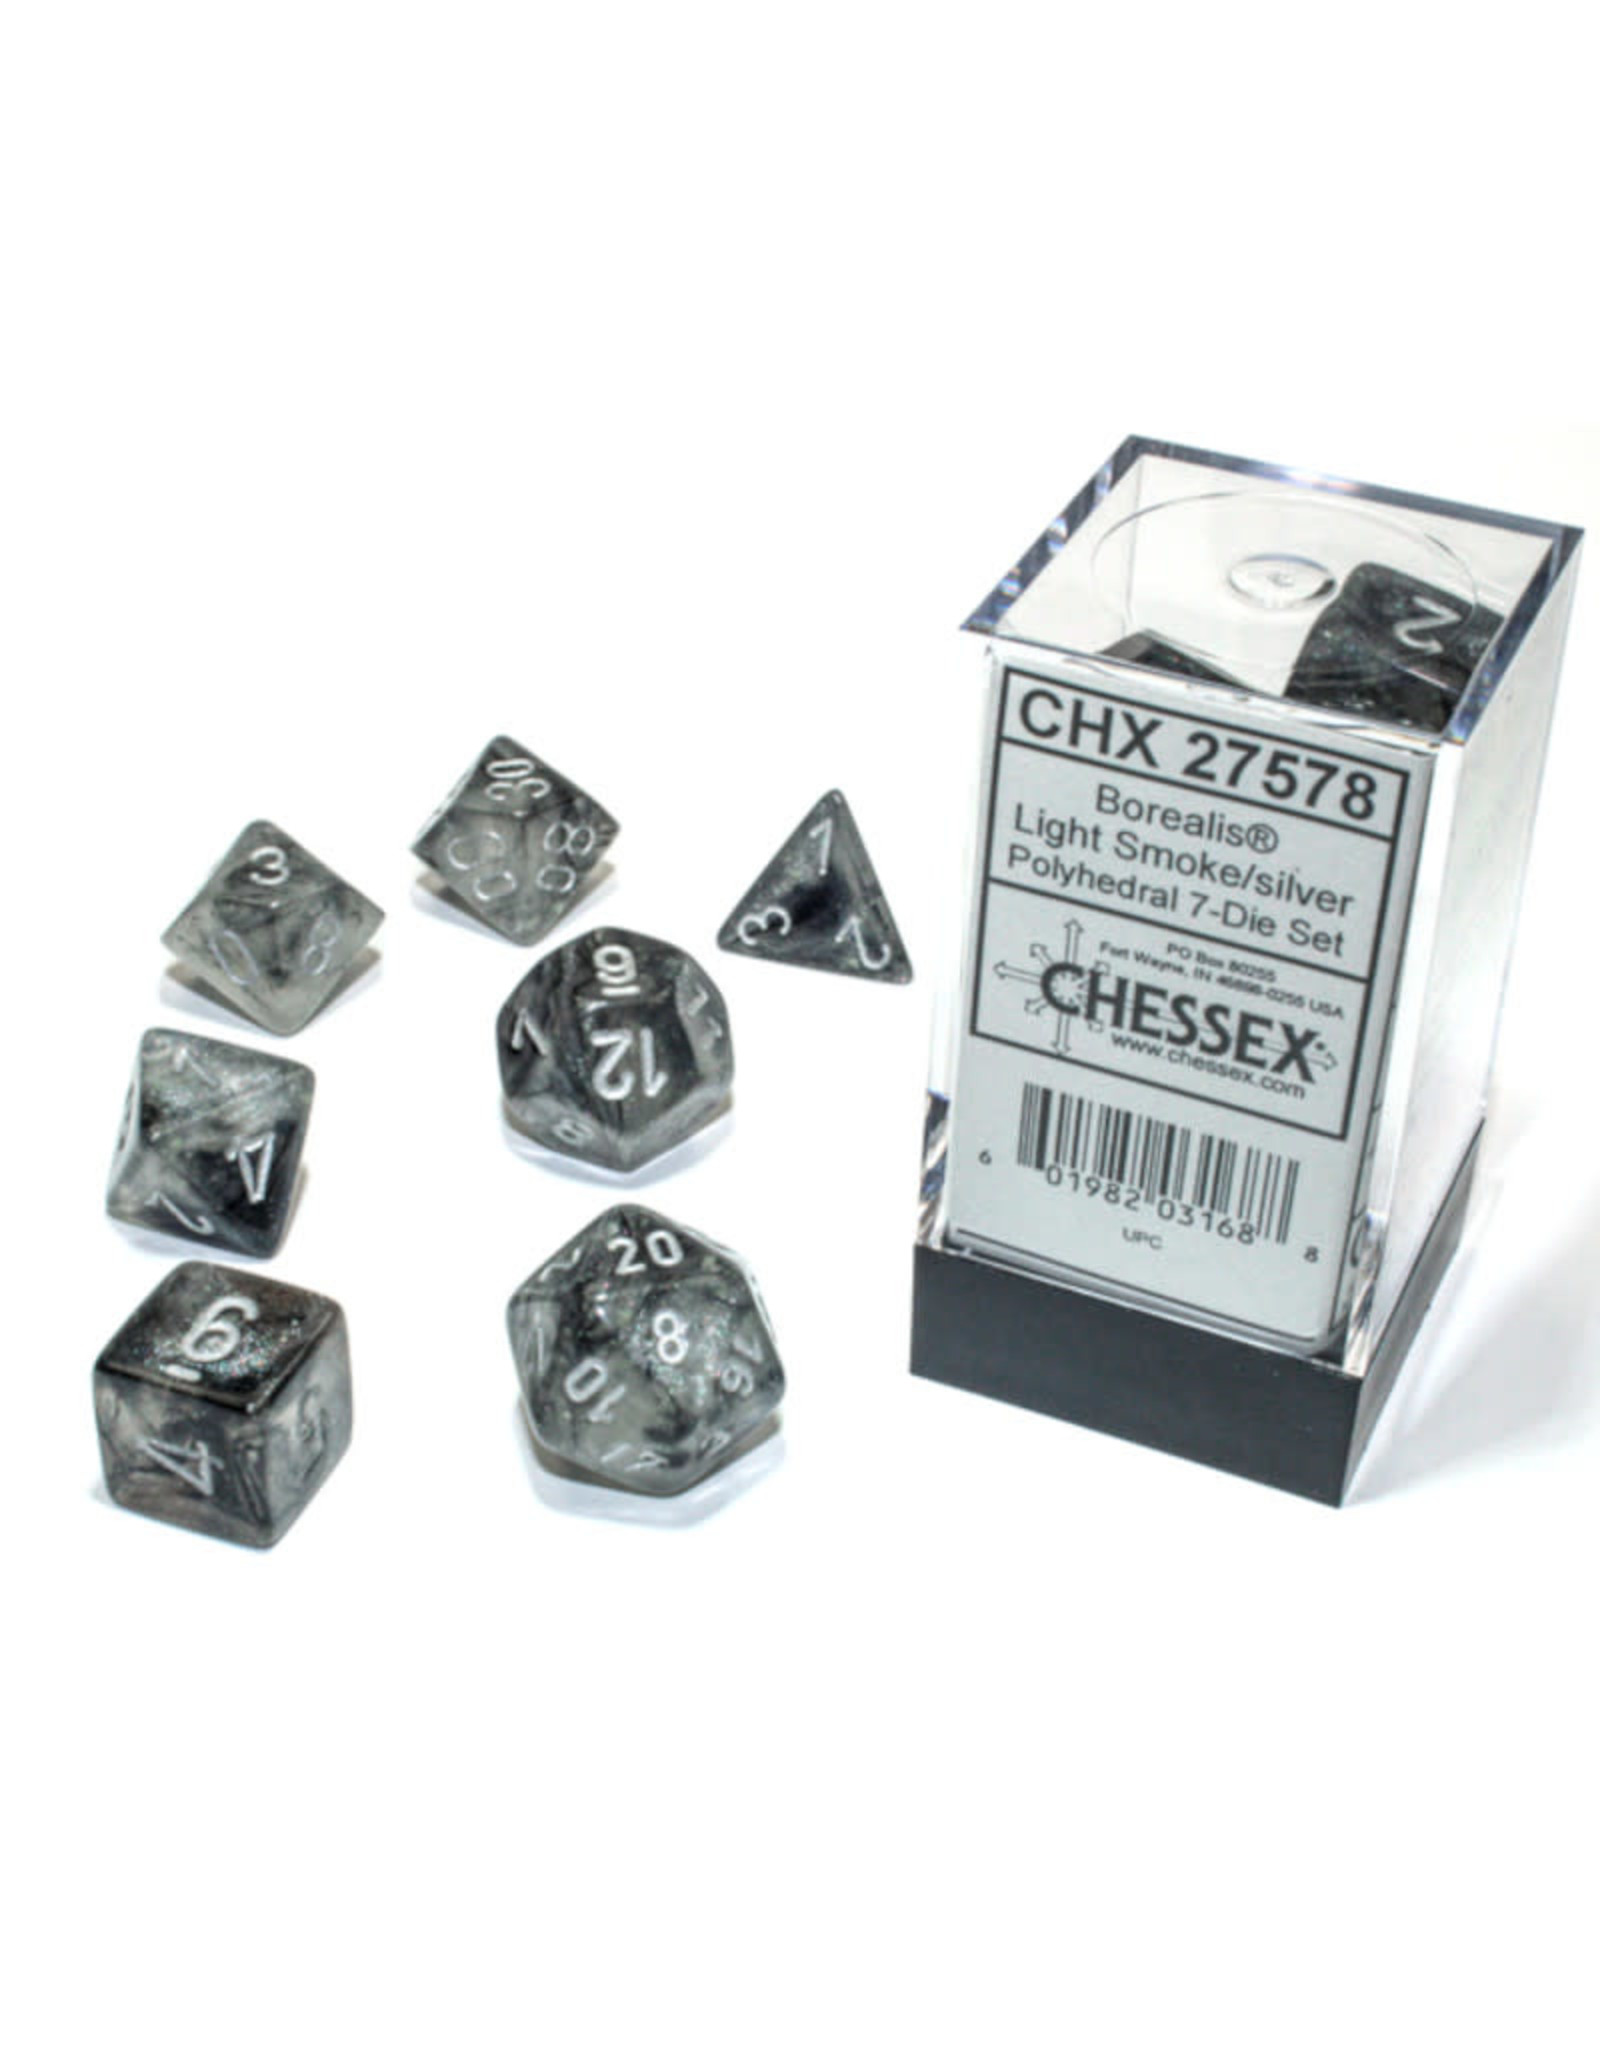 Chessex Polyhedral Dice Set: Borealis Light Smoke Set (7)